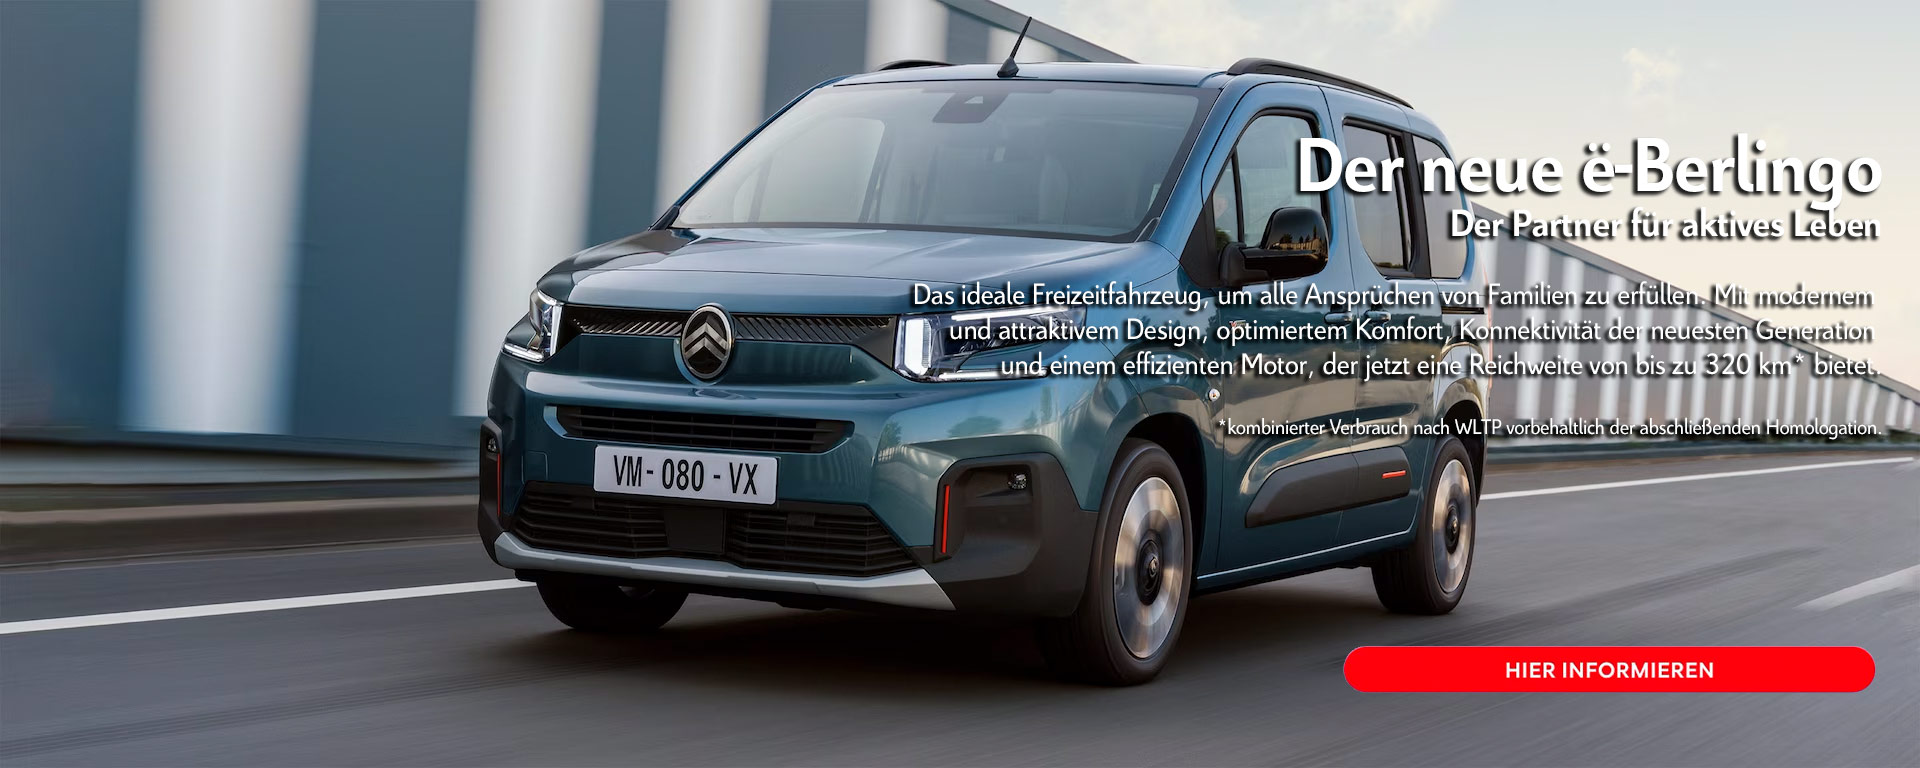 Der neue Citroën ë Berlingo